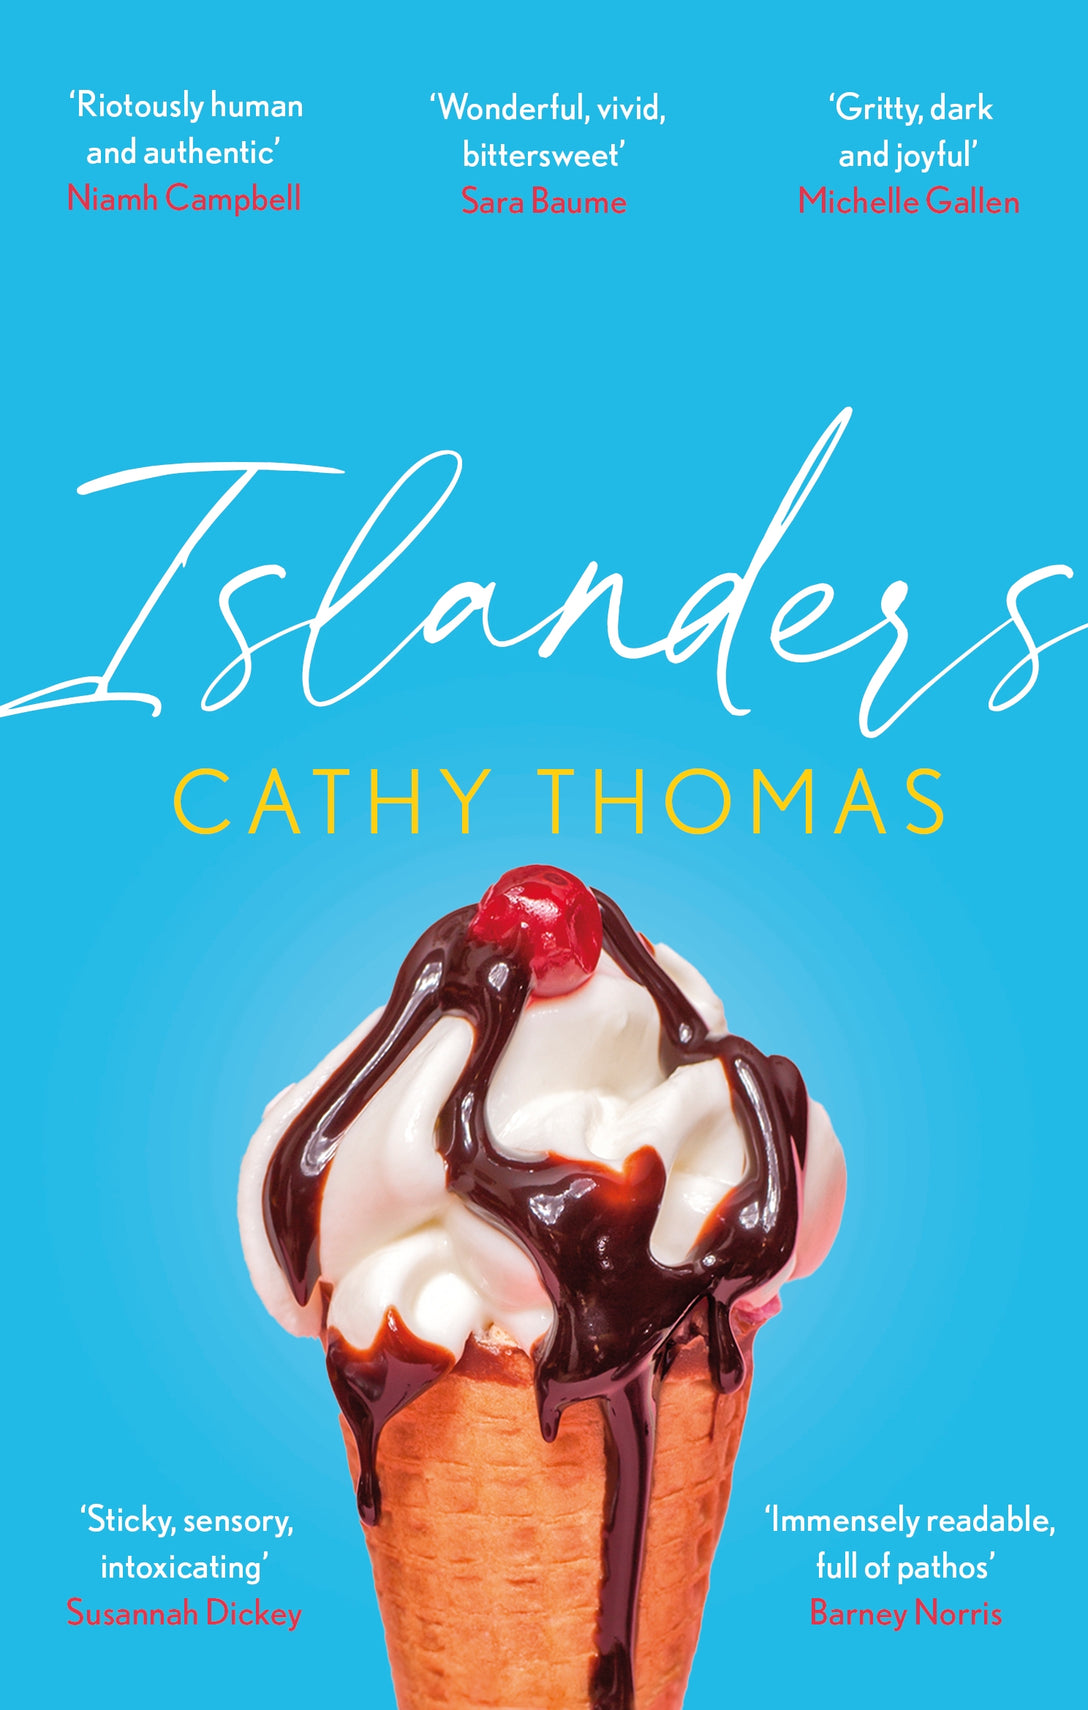 Islanders by Cathy Thomas